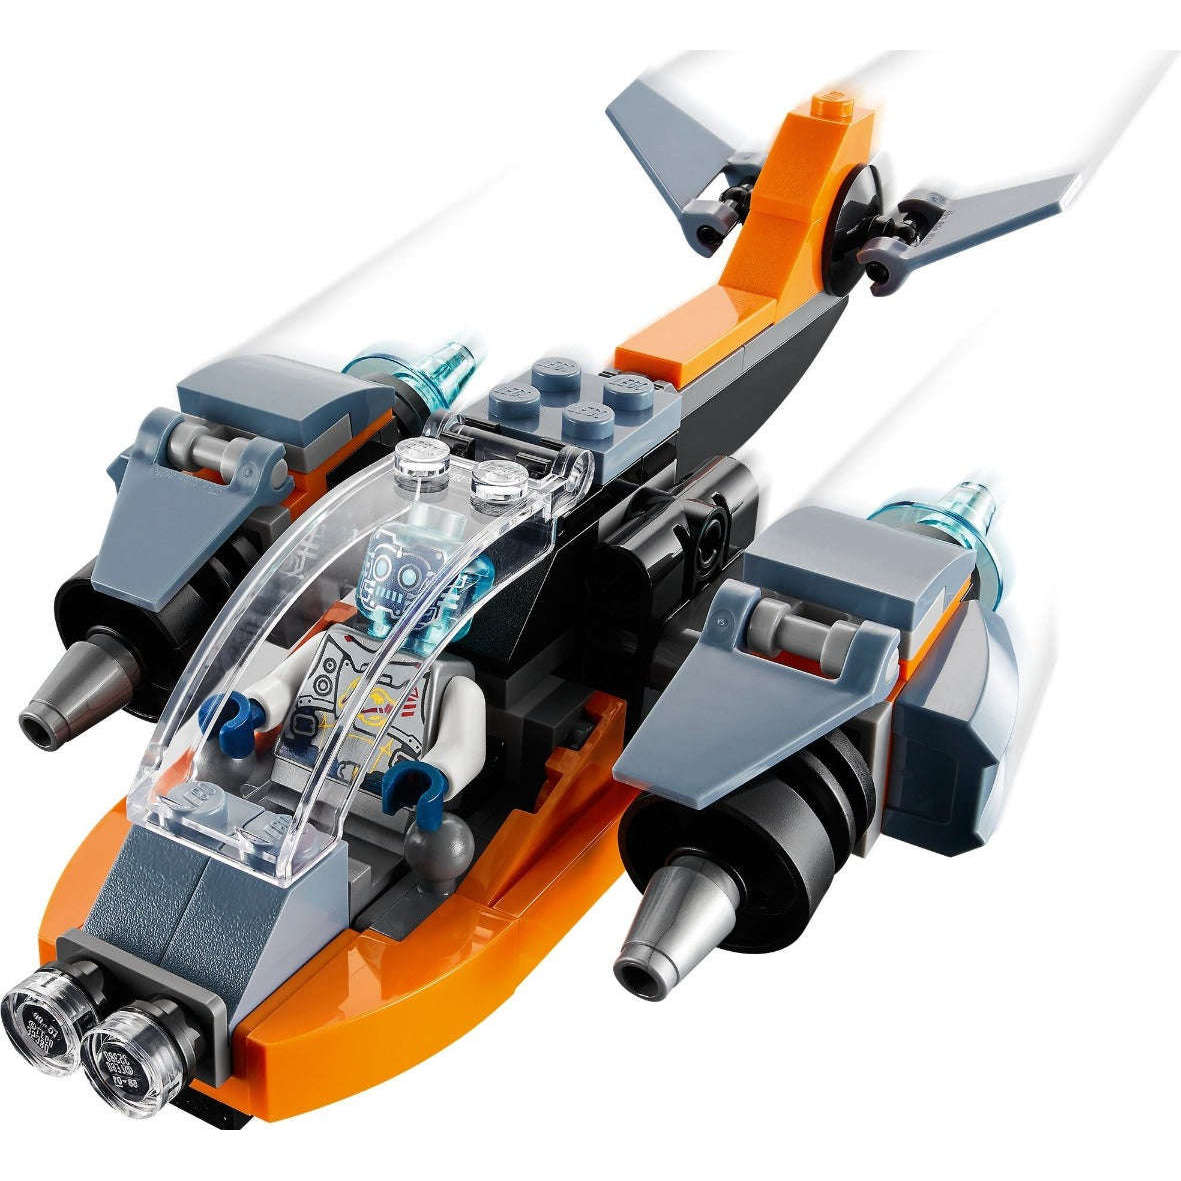 Lego 31111 Creator Cyber Drone